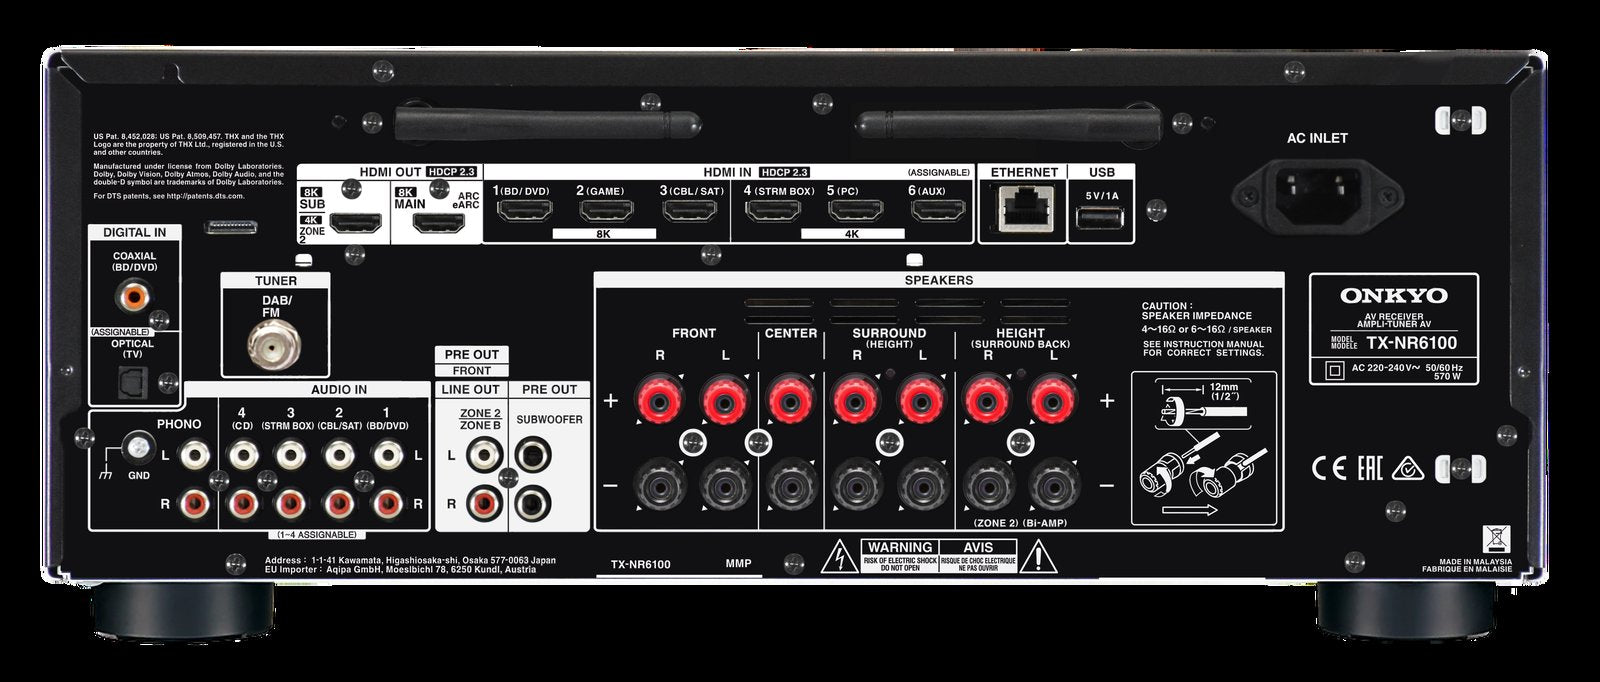 Onkyo TX-NR6100B surround receiver